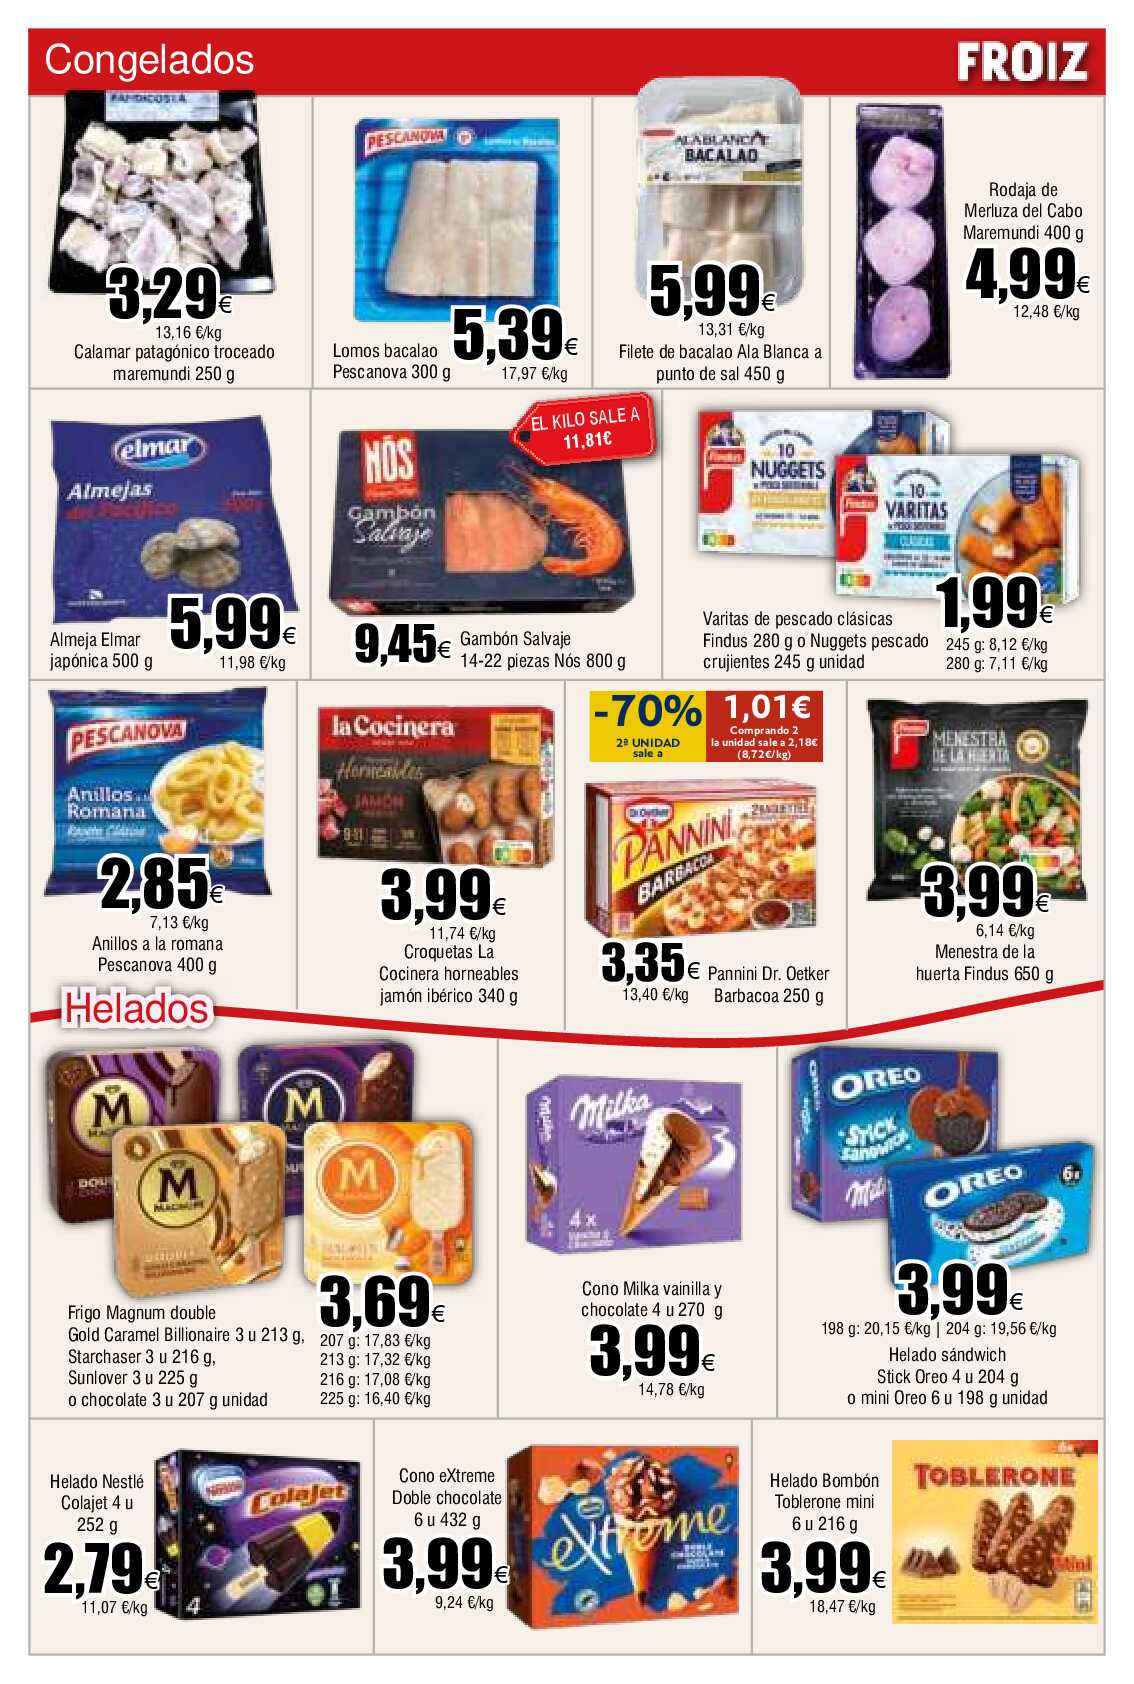 Ofertas supermercado Froiz. Página 04